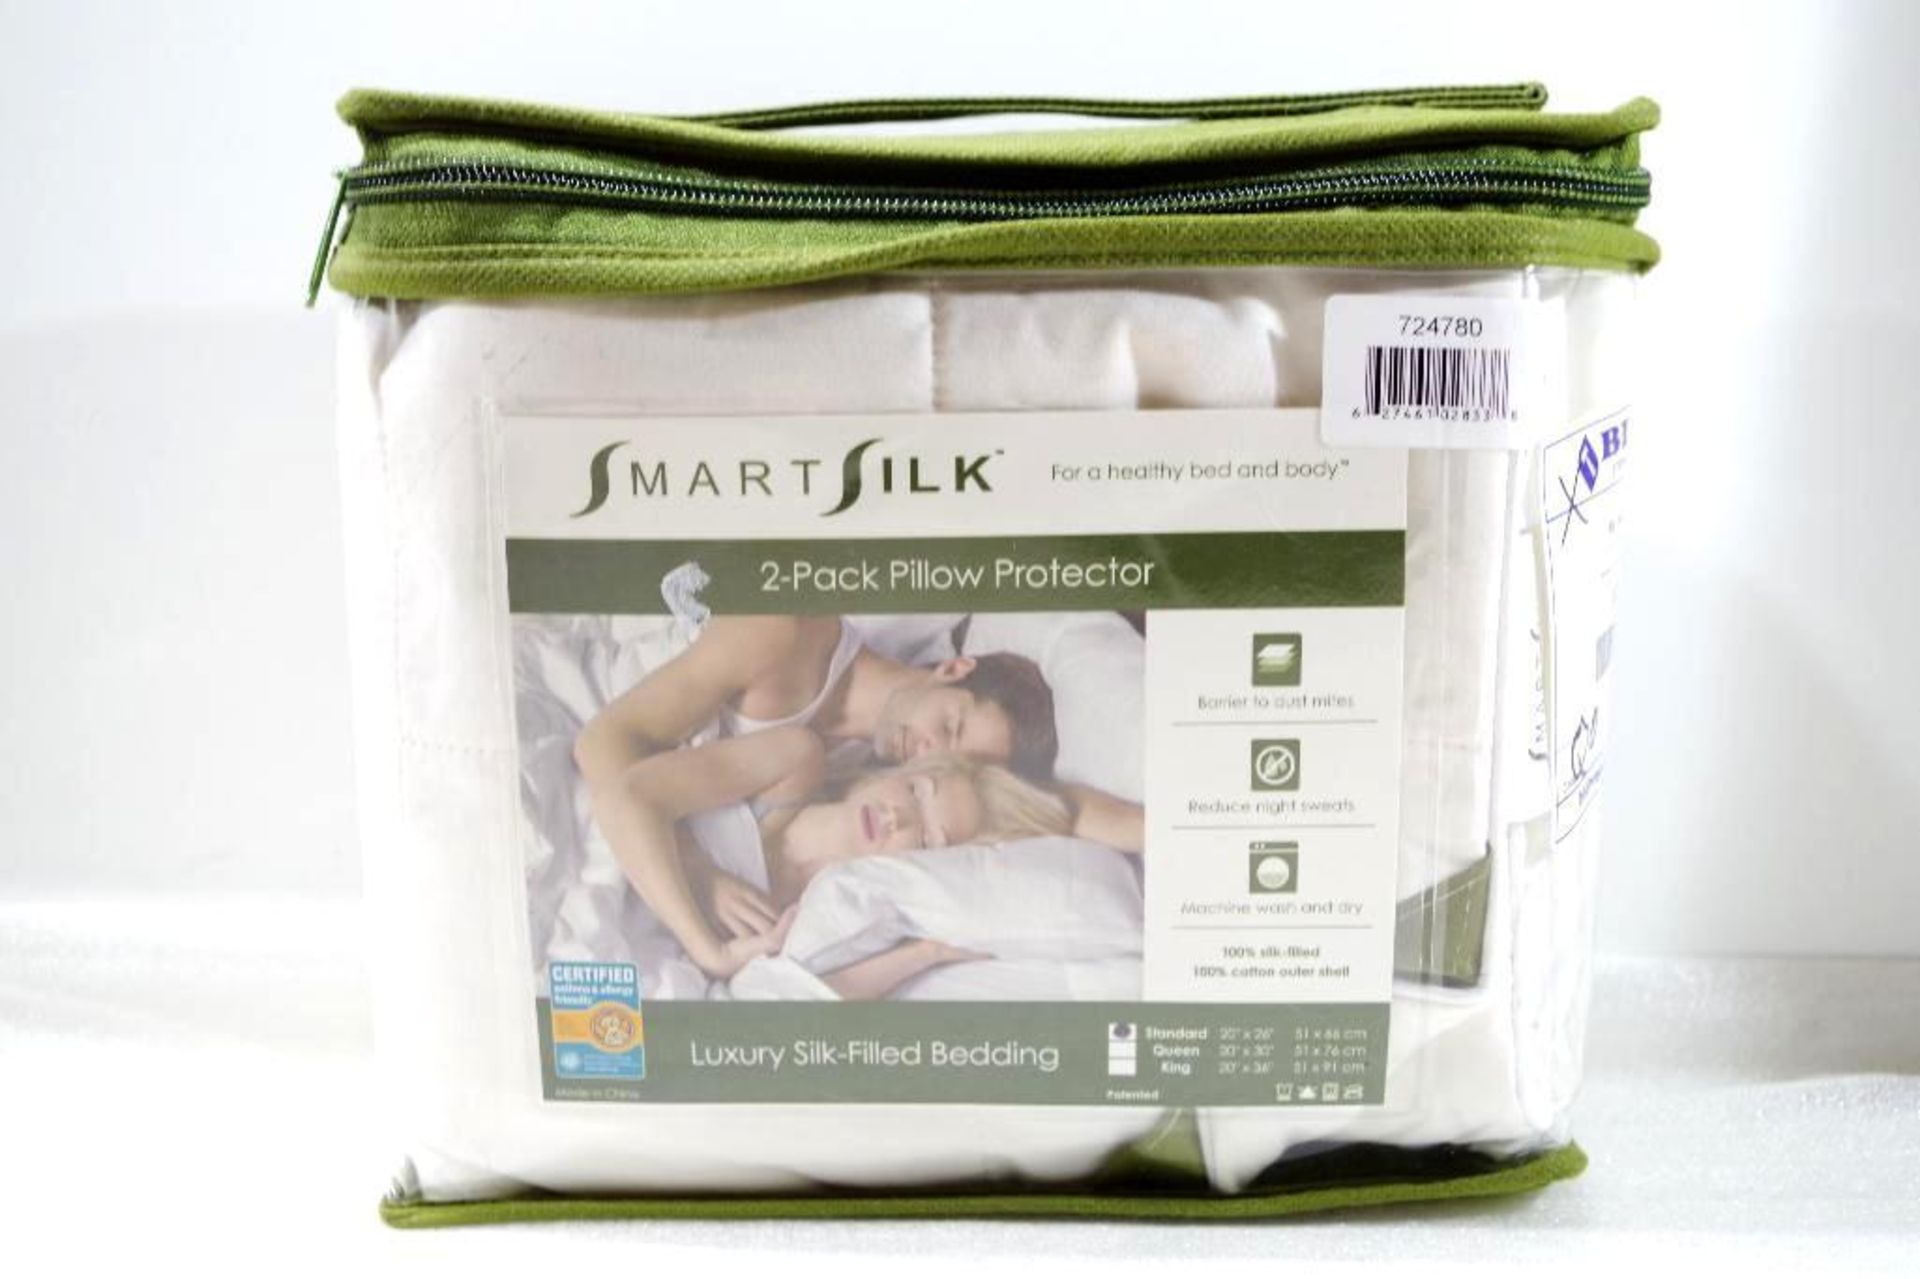 SMART SILK Standard 2-Pack Pillow Protector, Store Return